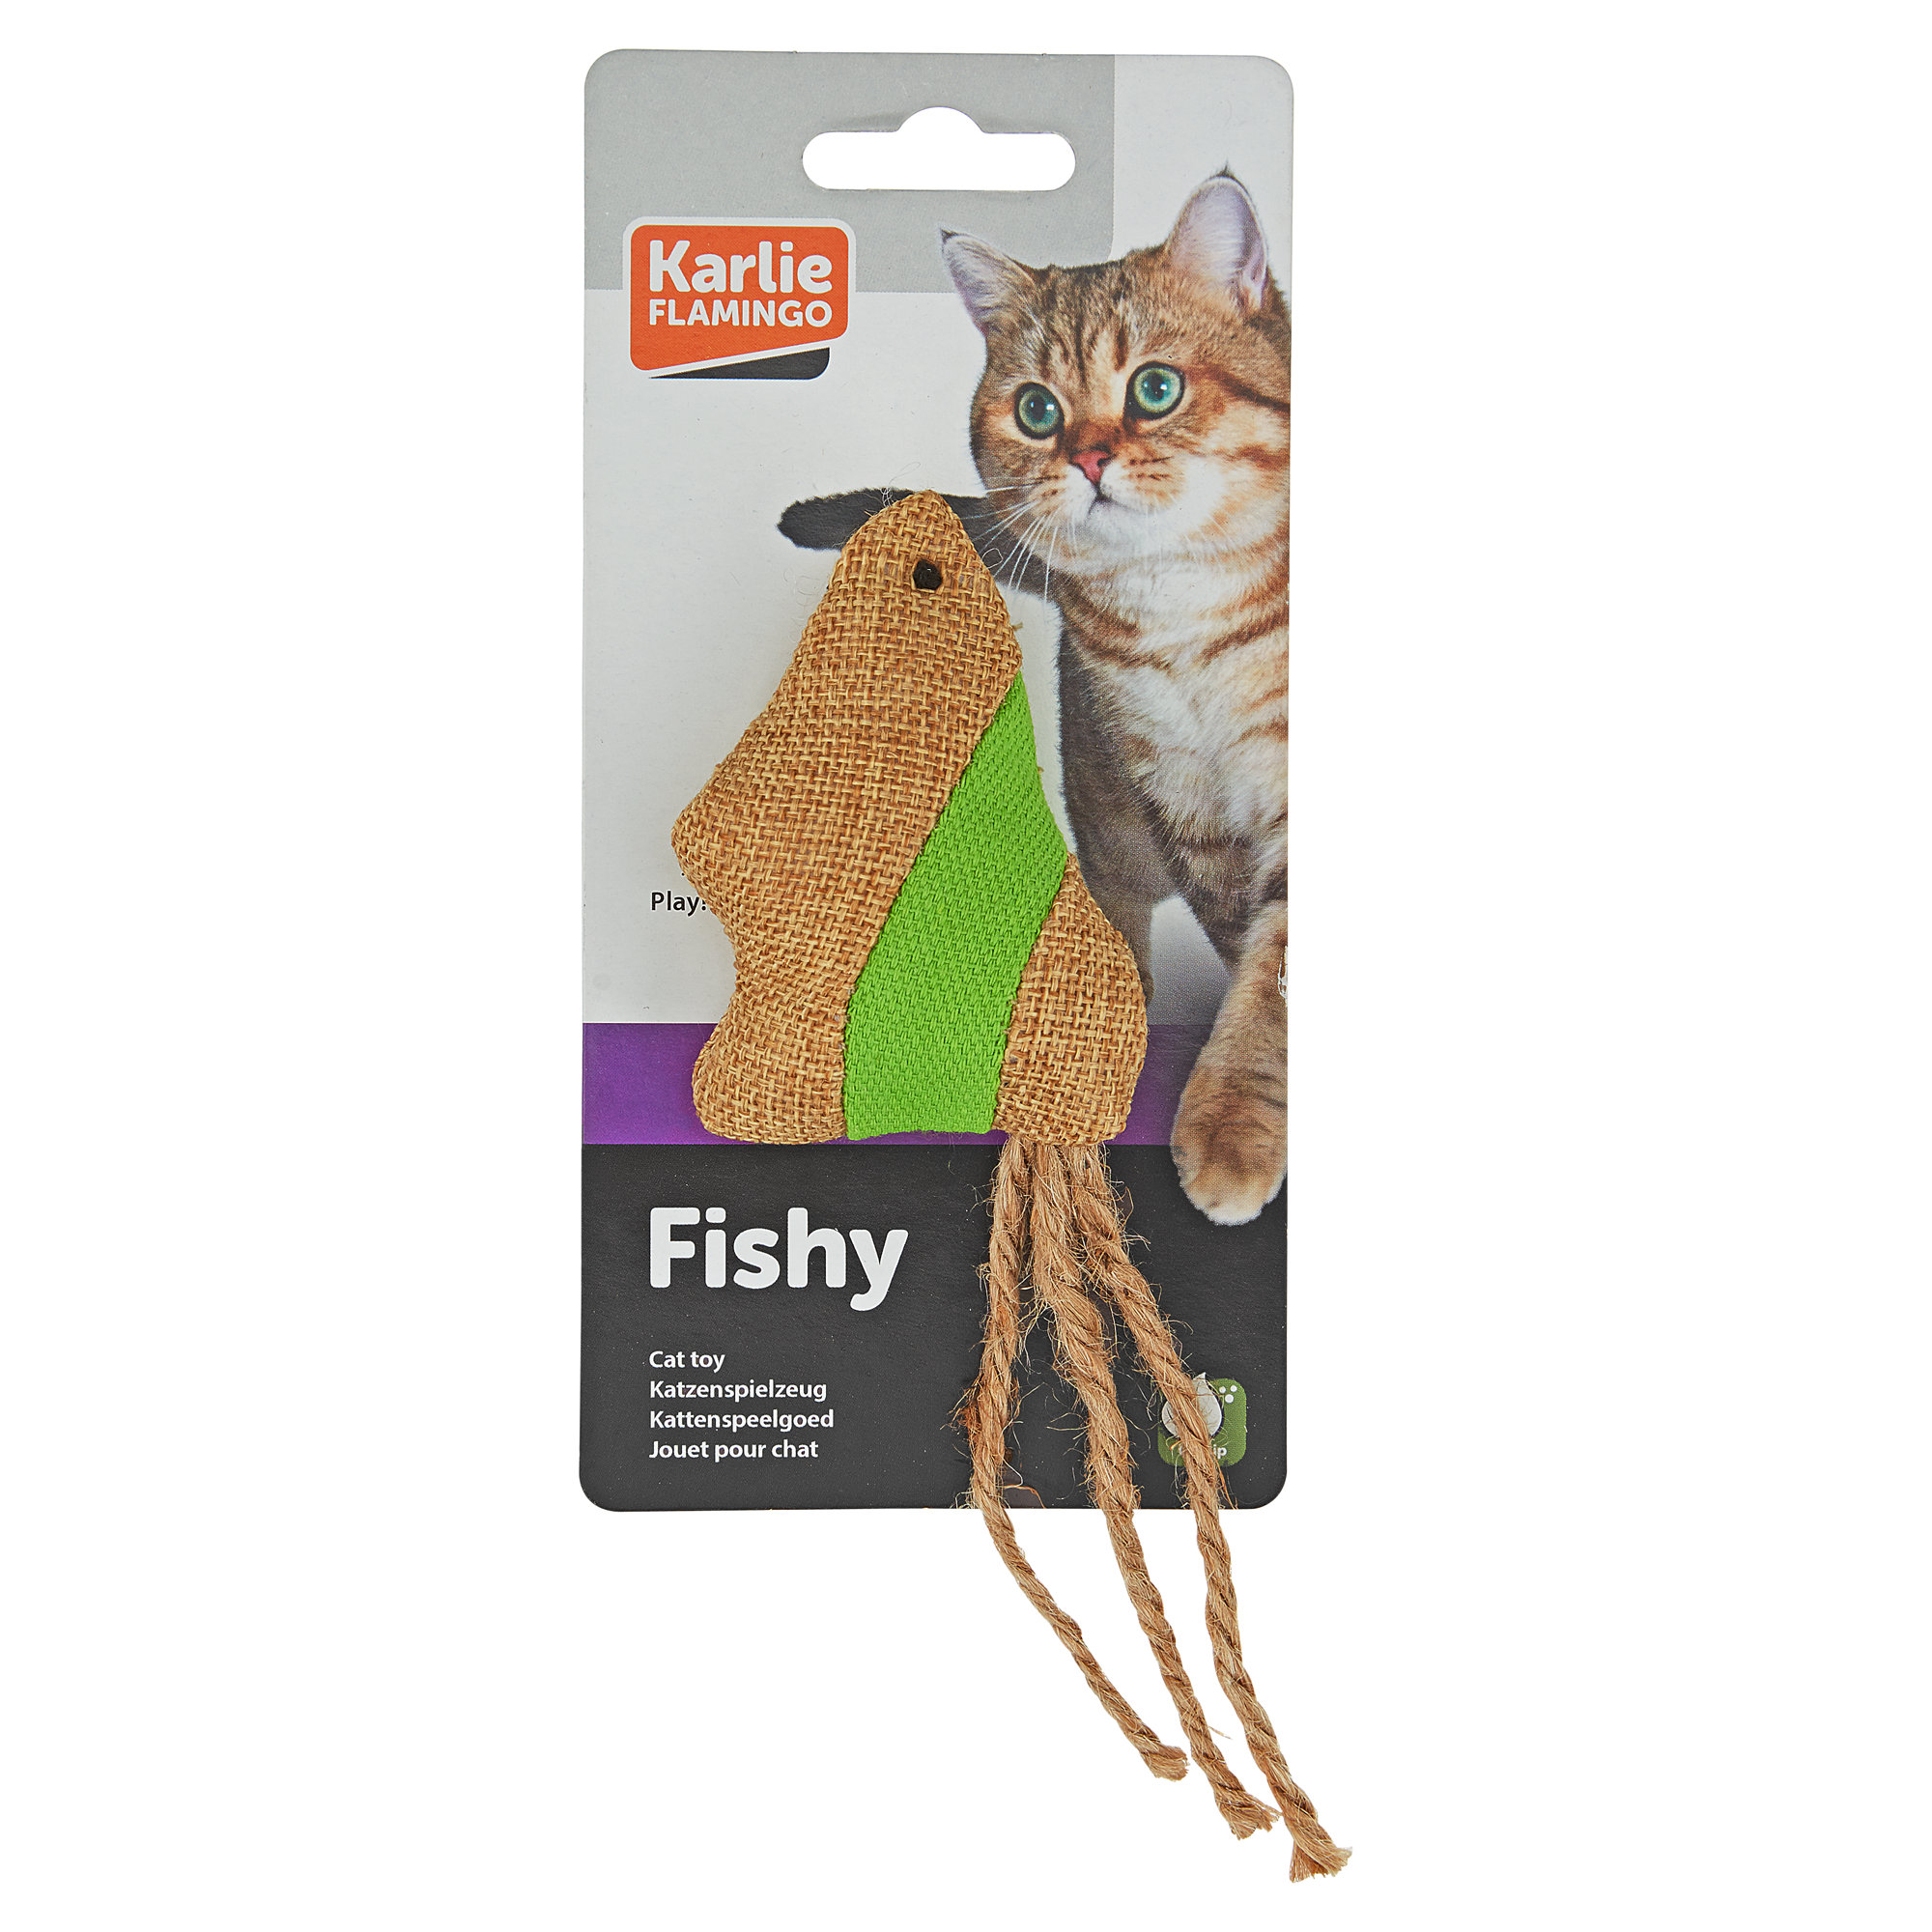 Katzenspielzeug "Fishy" + product picture